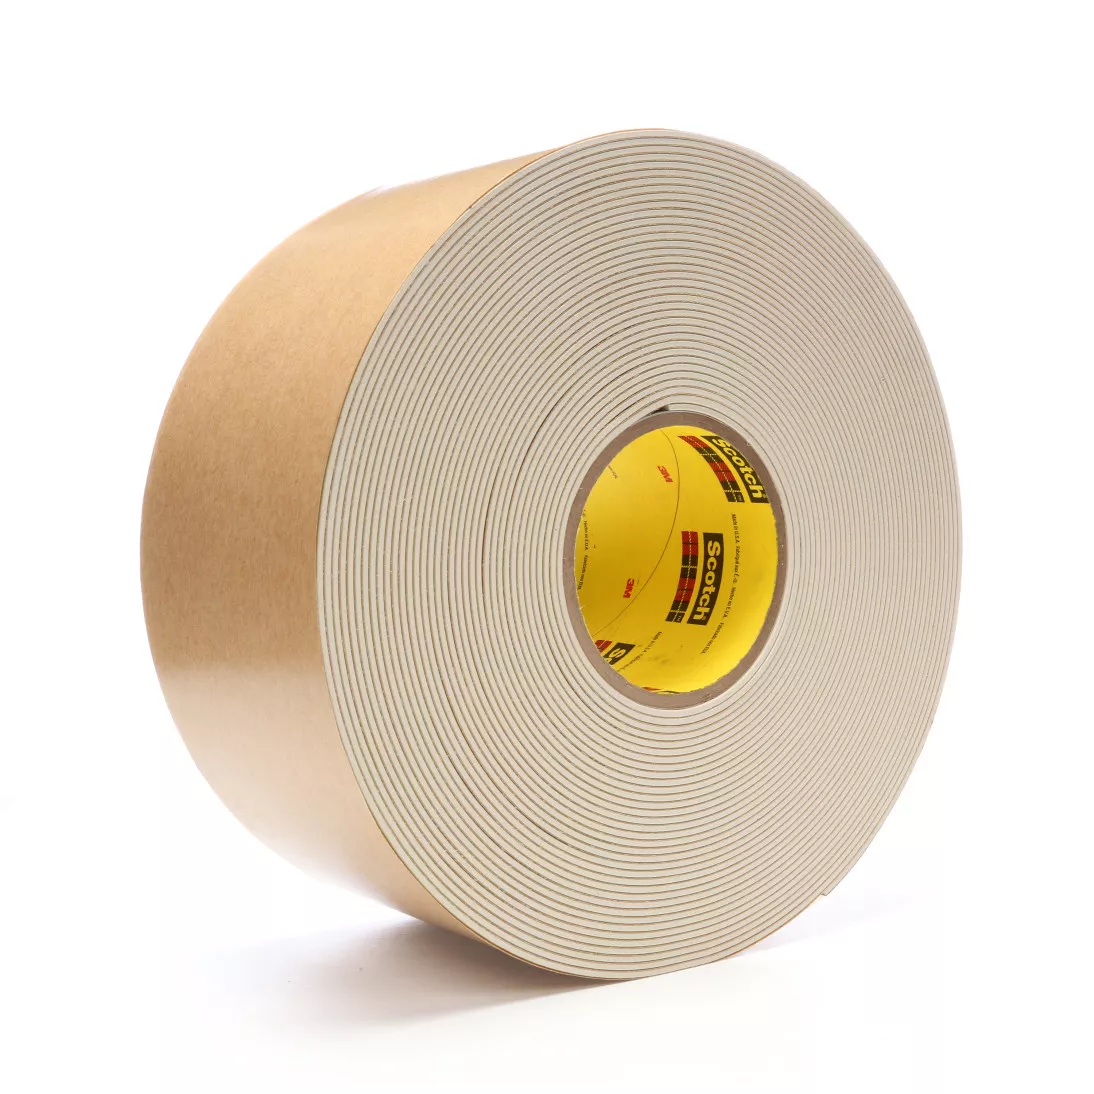 3M™ Impact Stripping Tape 528, Tan, 4 in x 20 yd, 82 mil, 2 rolls per
case